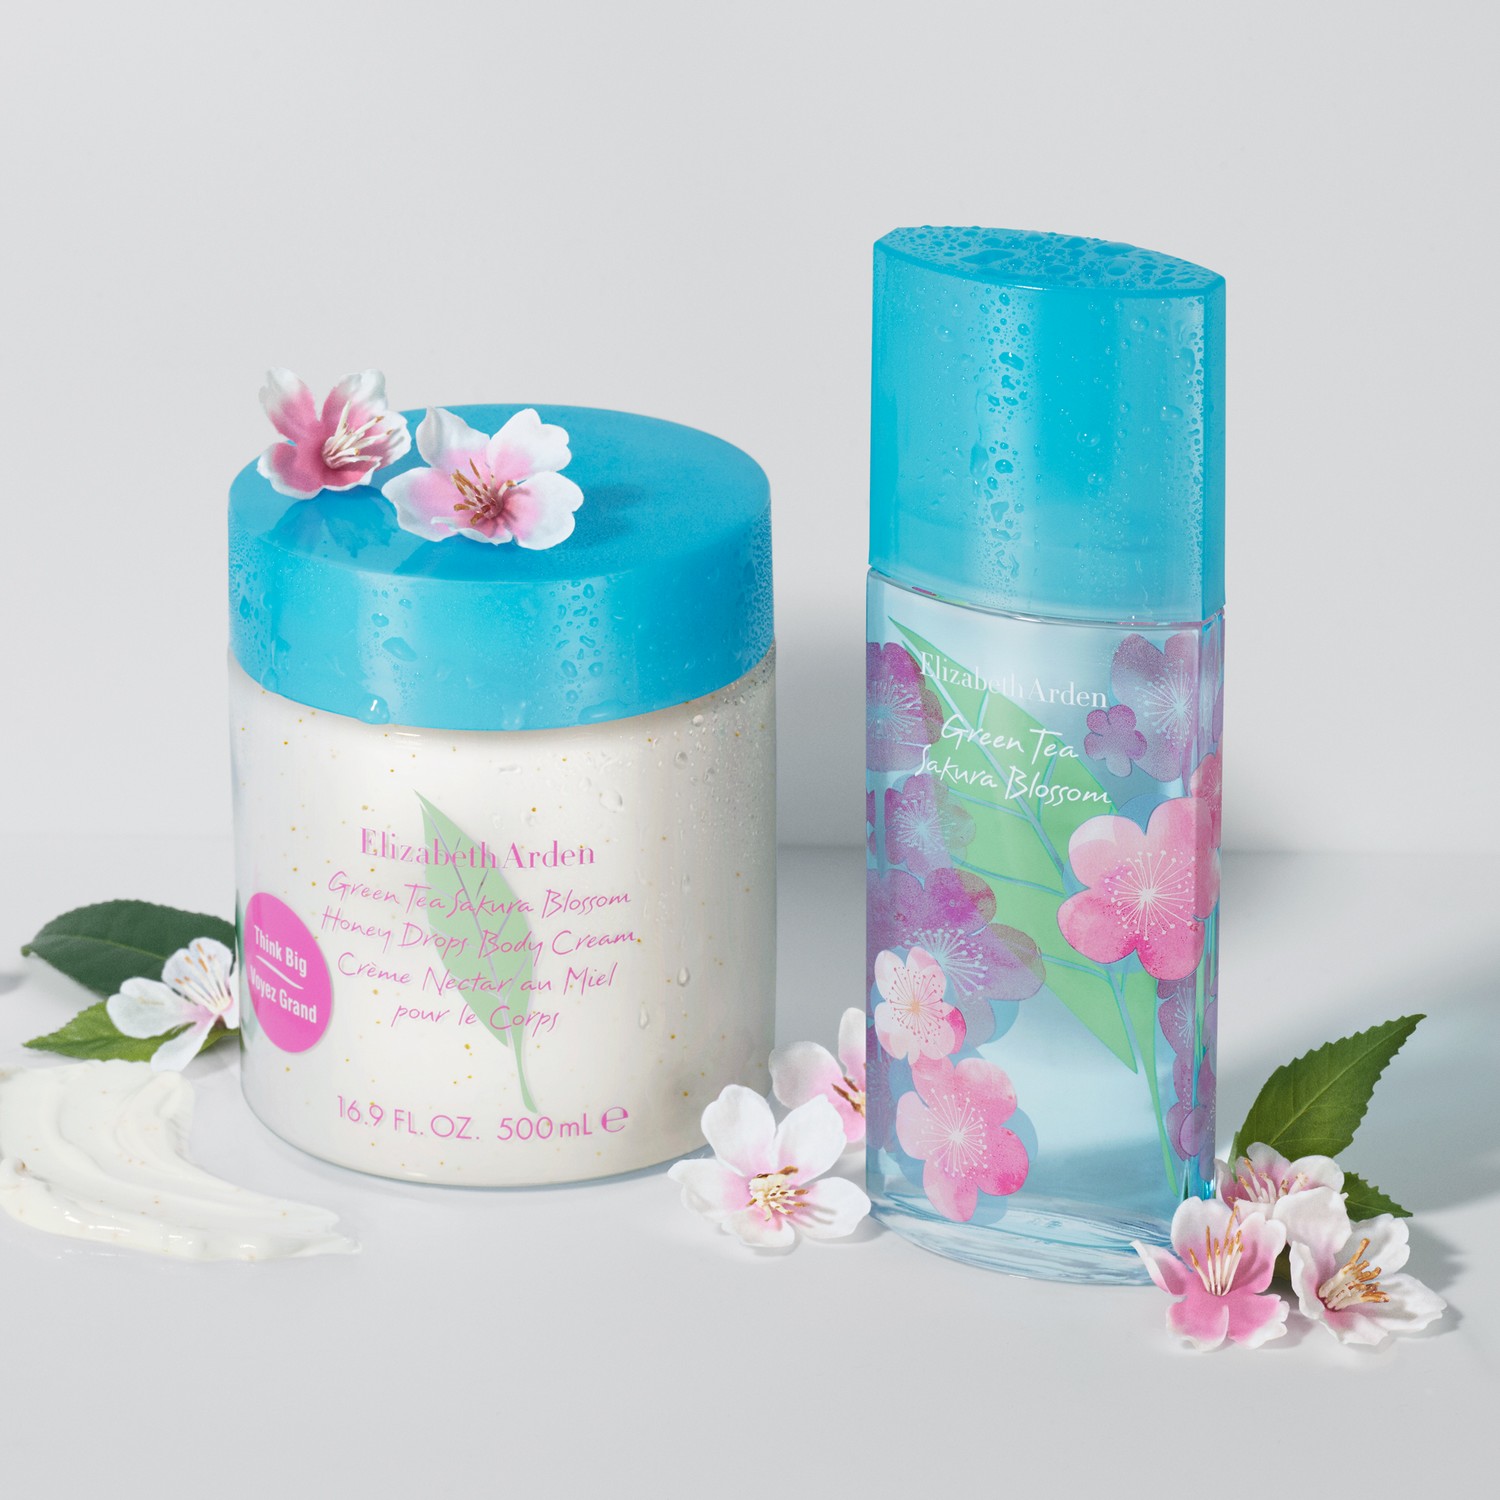 Elizabeth Arden Green Tea Sakura Blossom Honey Drops Body Cream 500ml